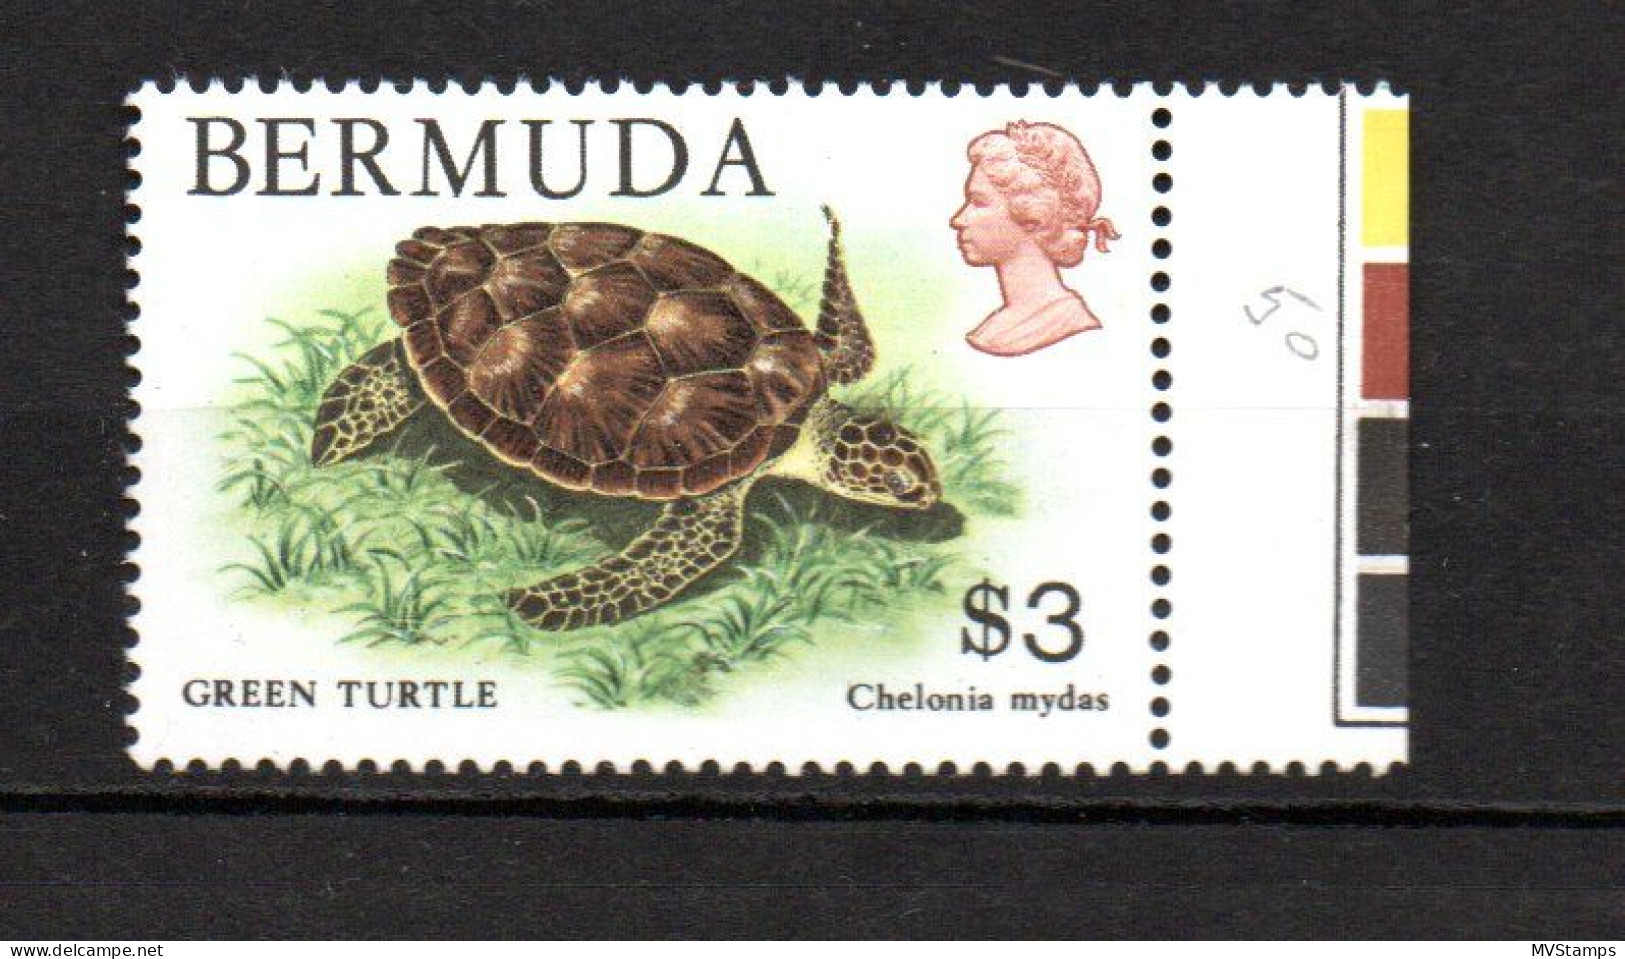 Bermuda 1979 Definitive $3.00 Turtle Stamps (Michel 367) MNH - Bermudes